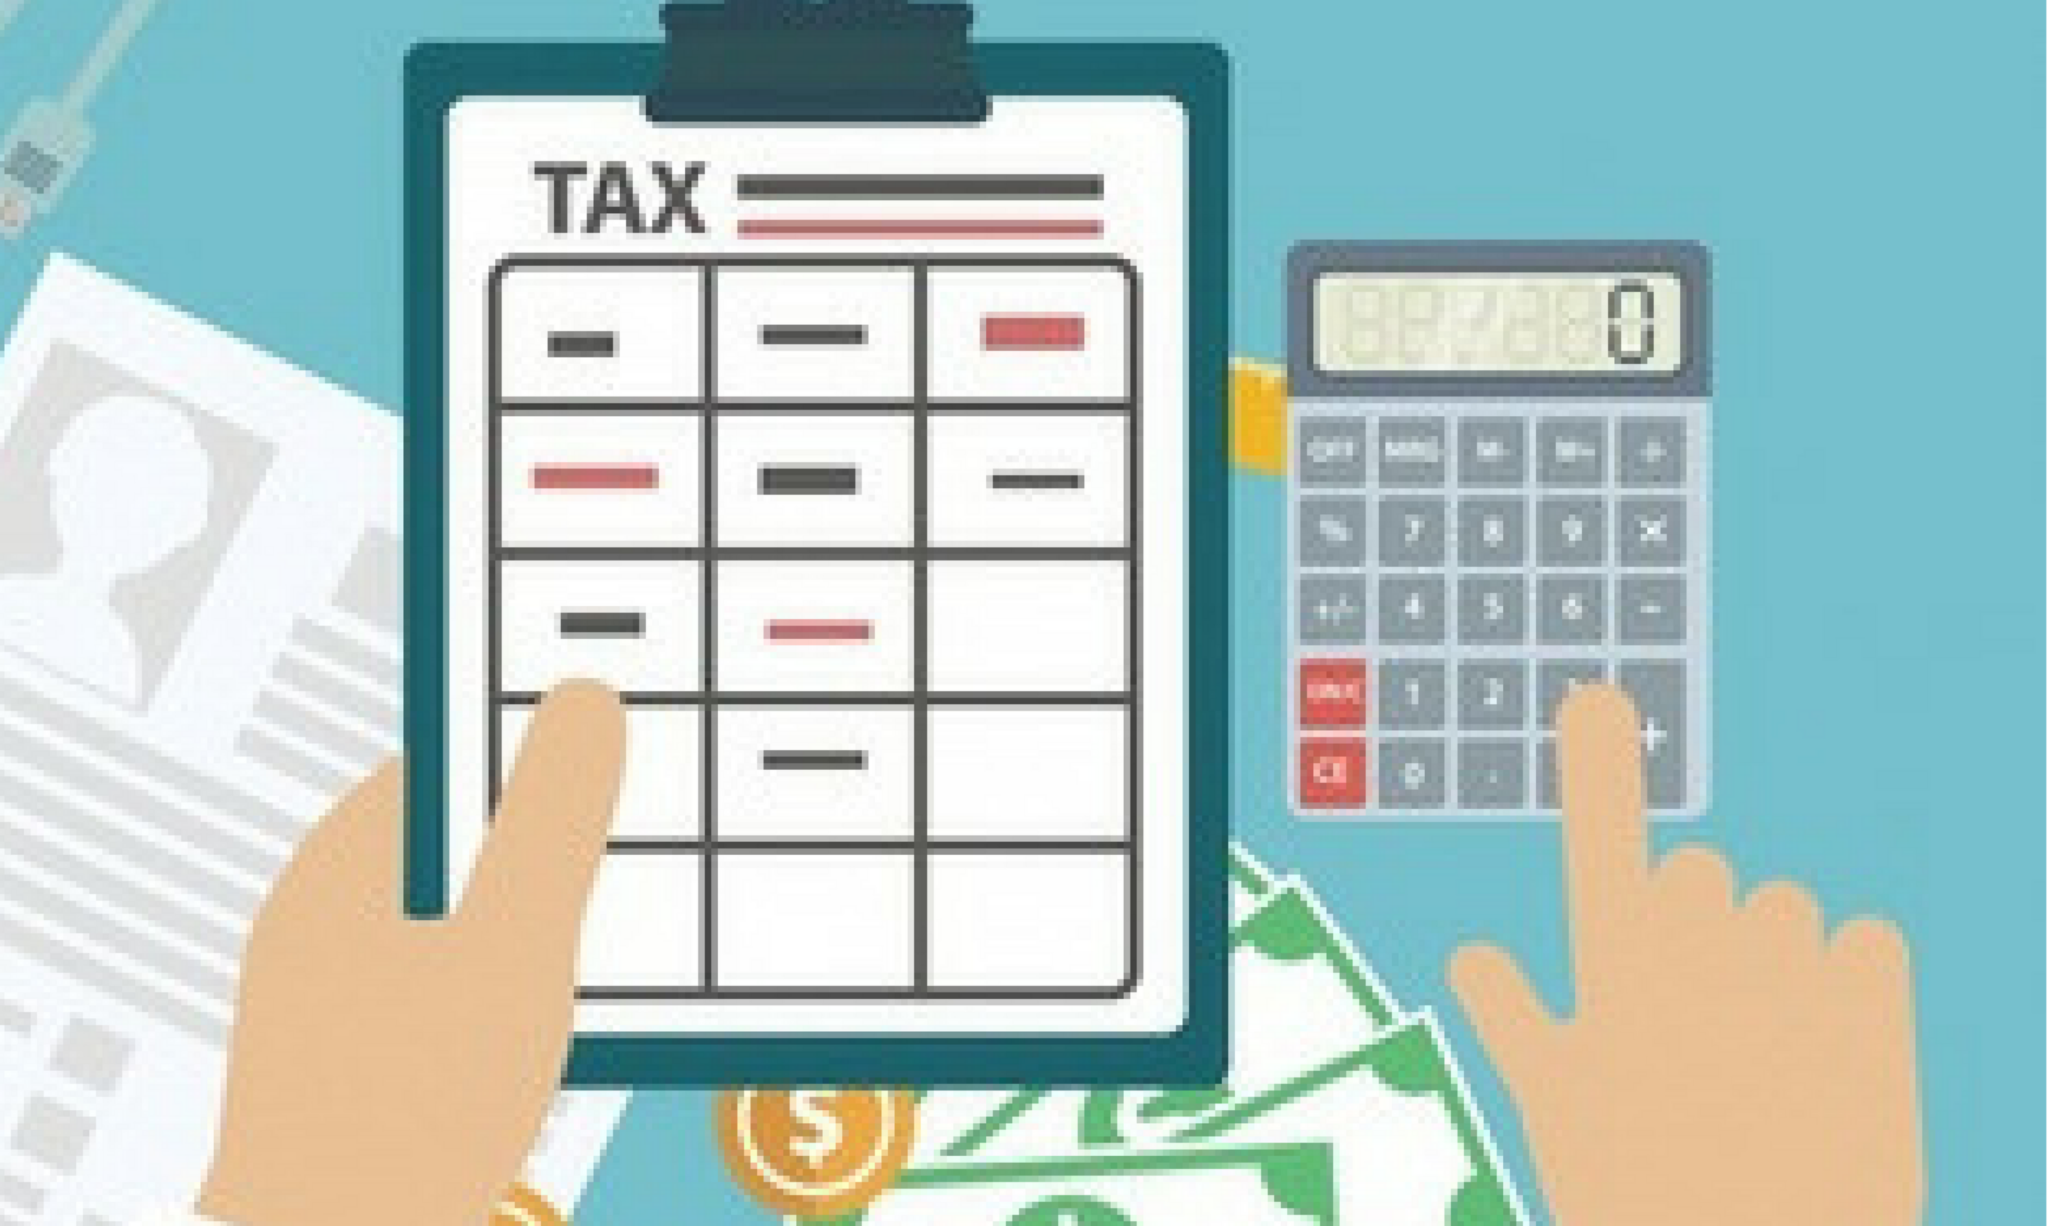 filing estimated taxes